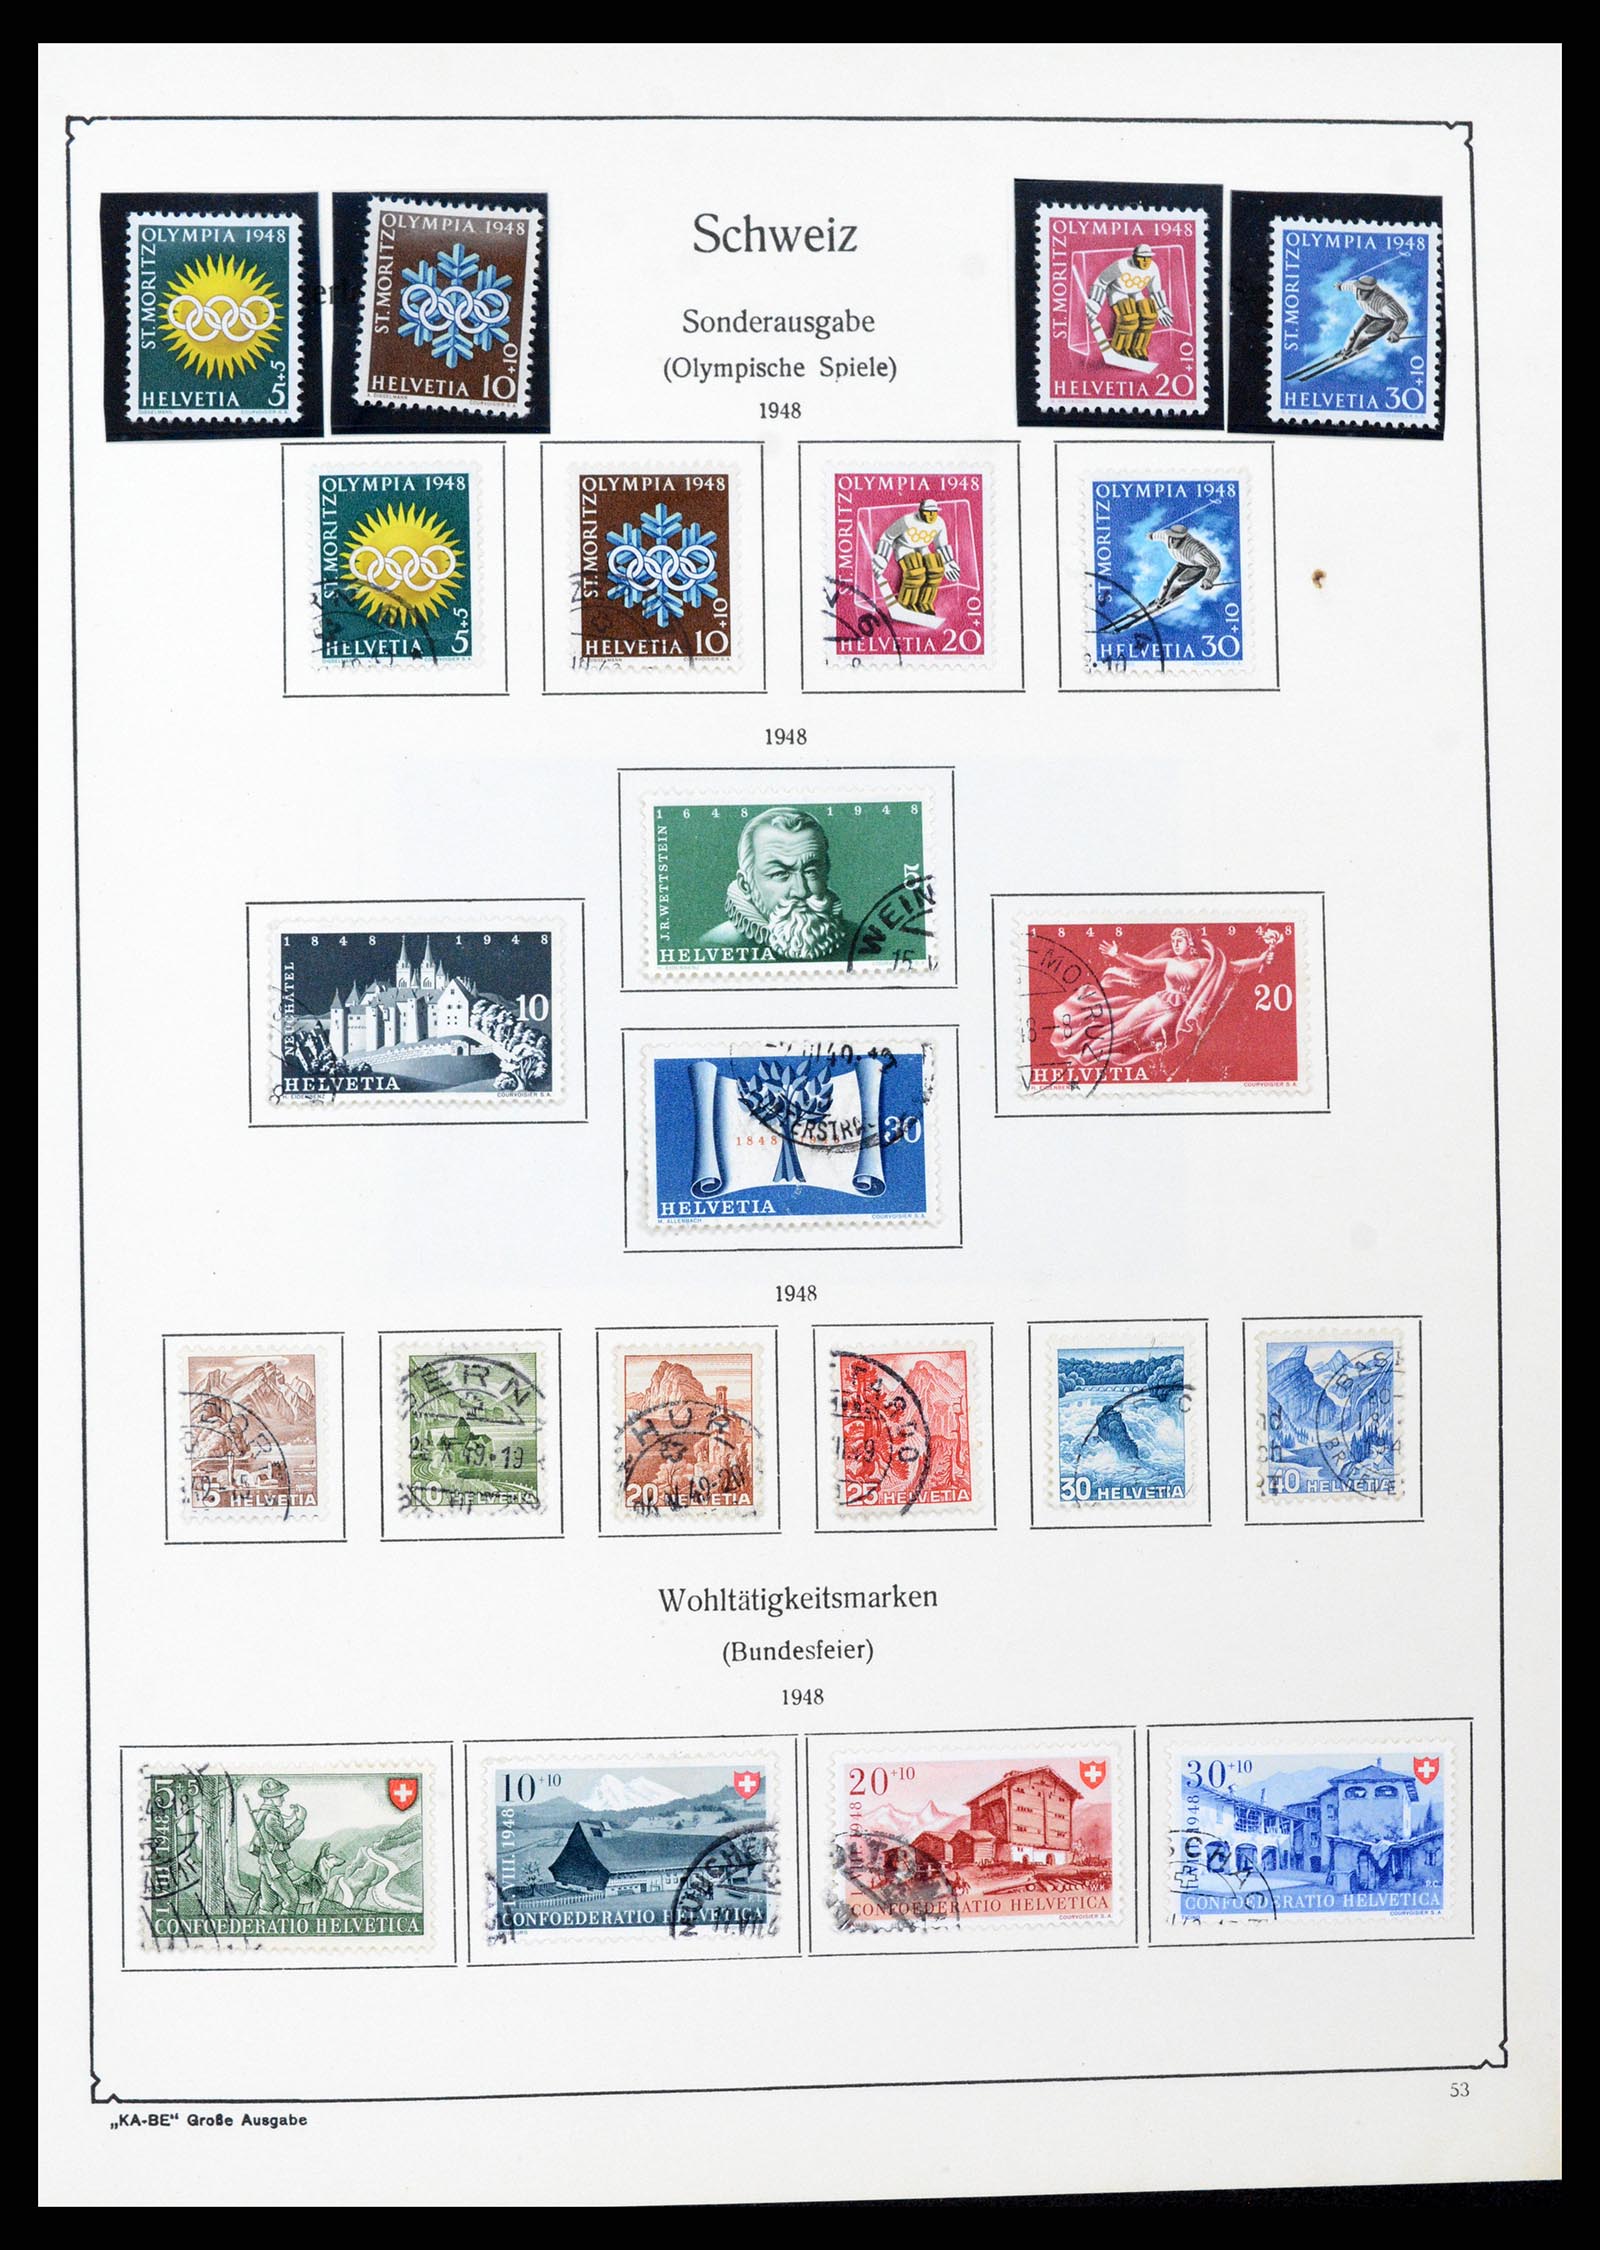 37588 051 - Stamp collection 37588 Switzerland 1854-1974.